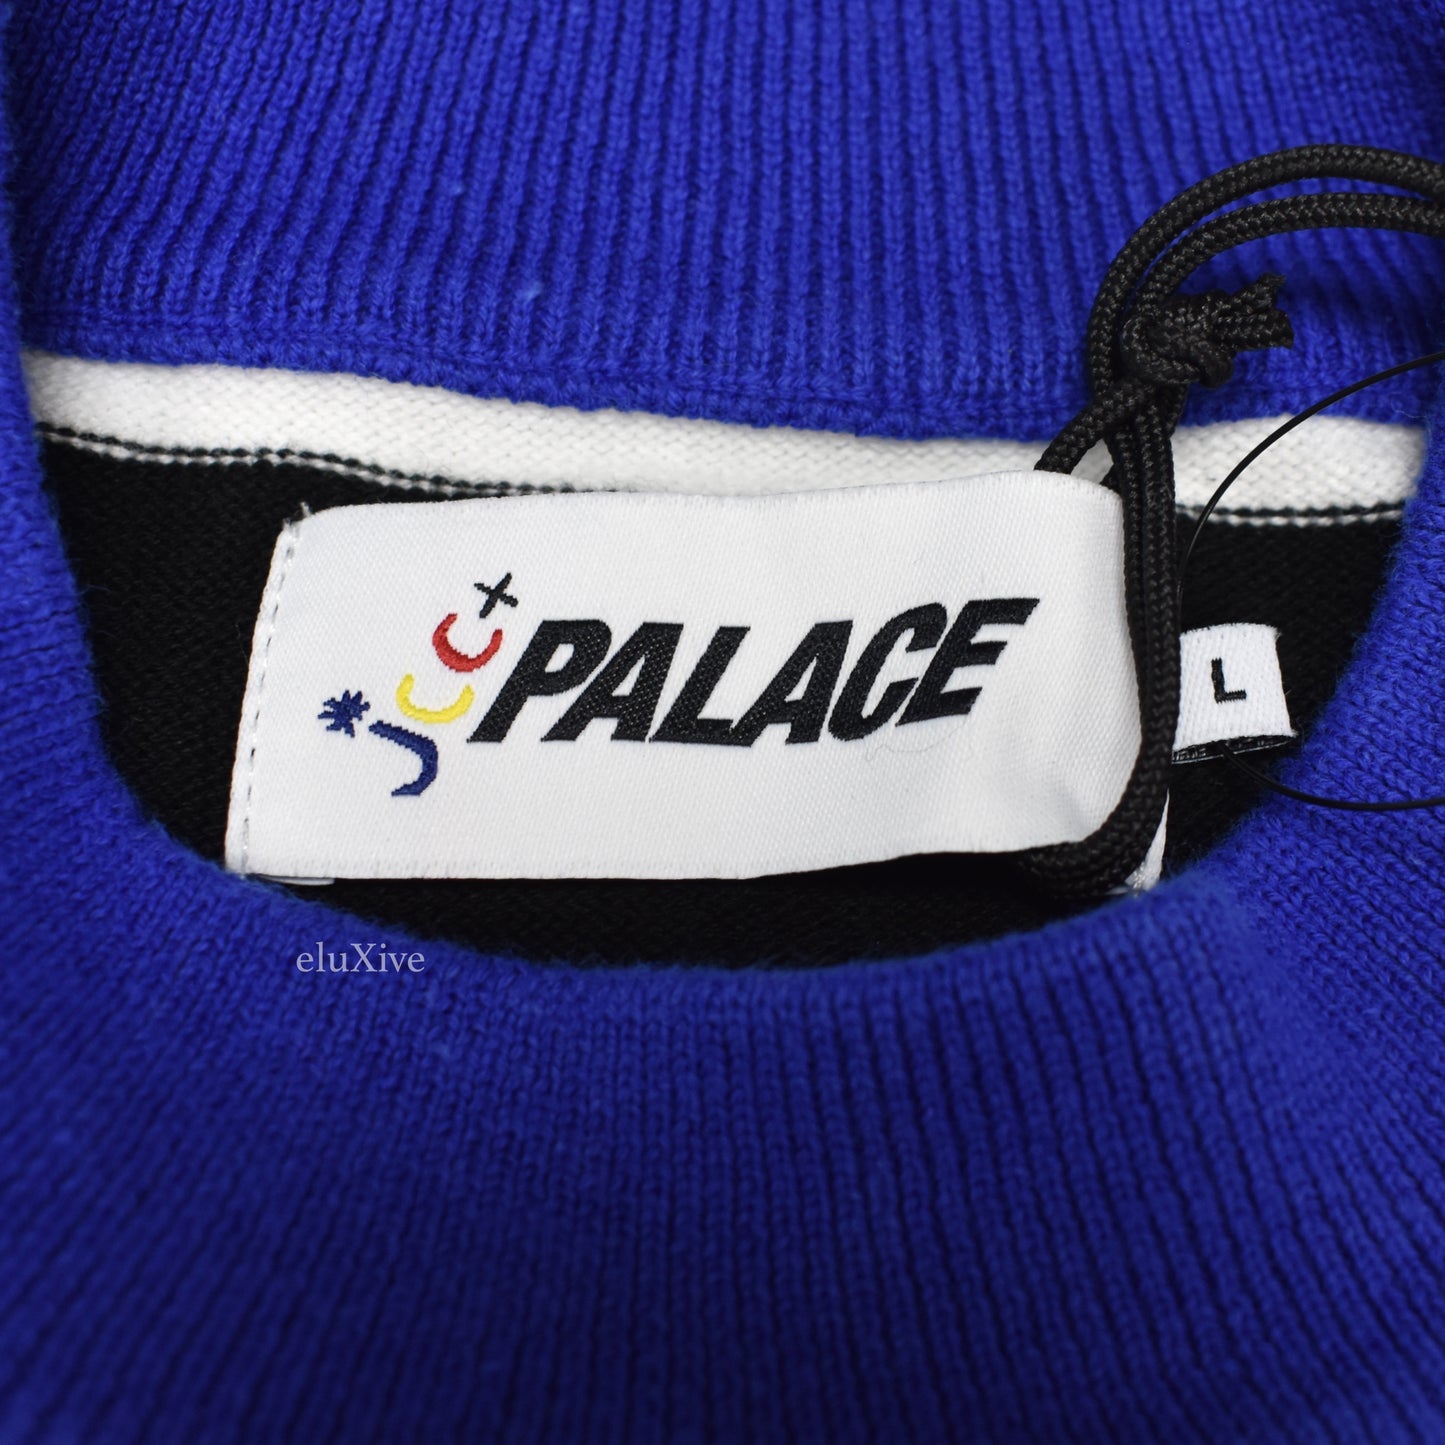 Palace x JCDC - Stripe Knit Sweater